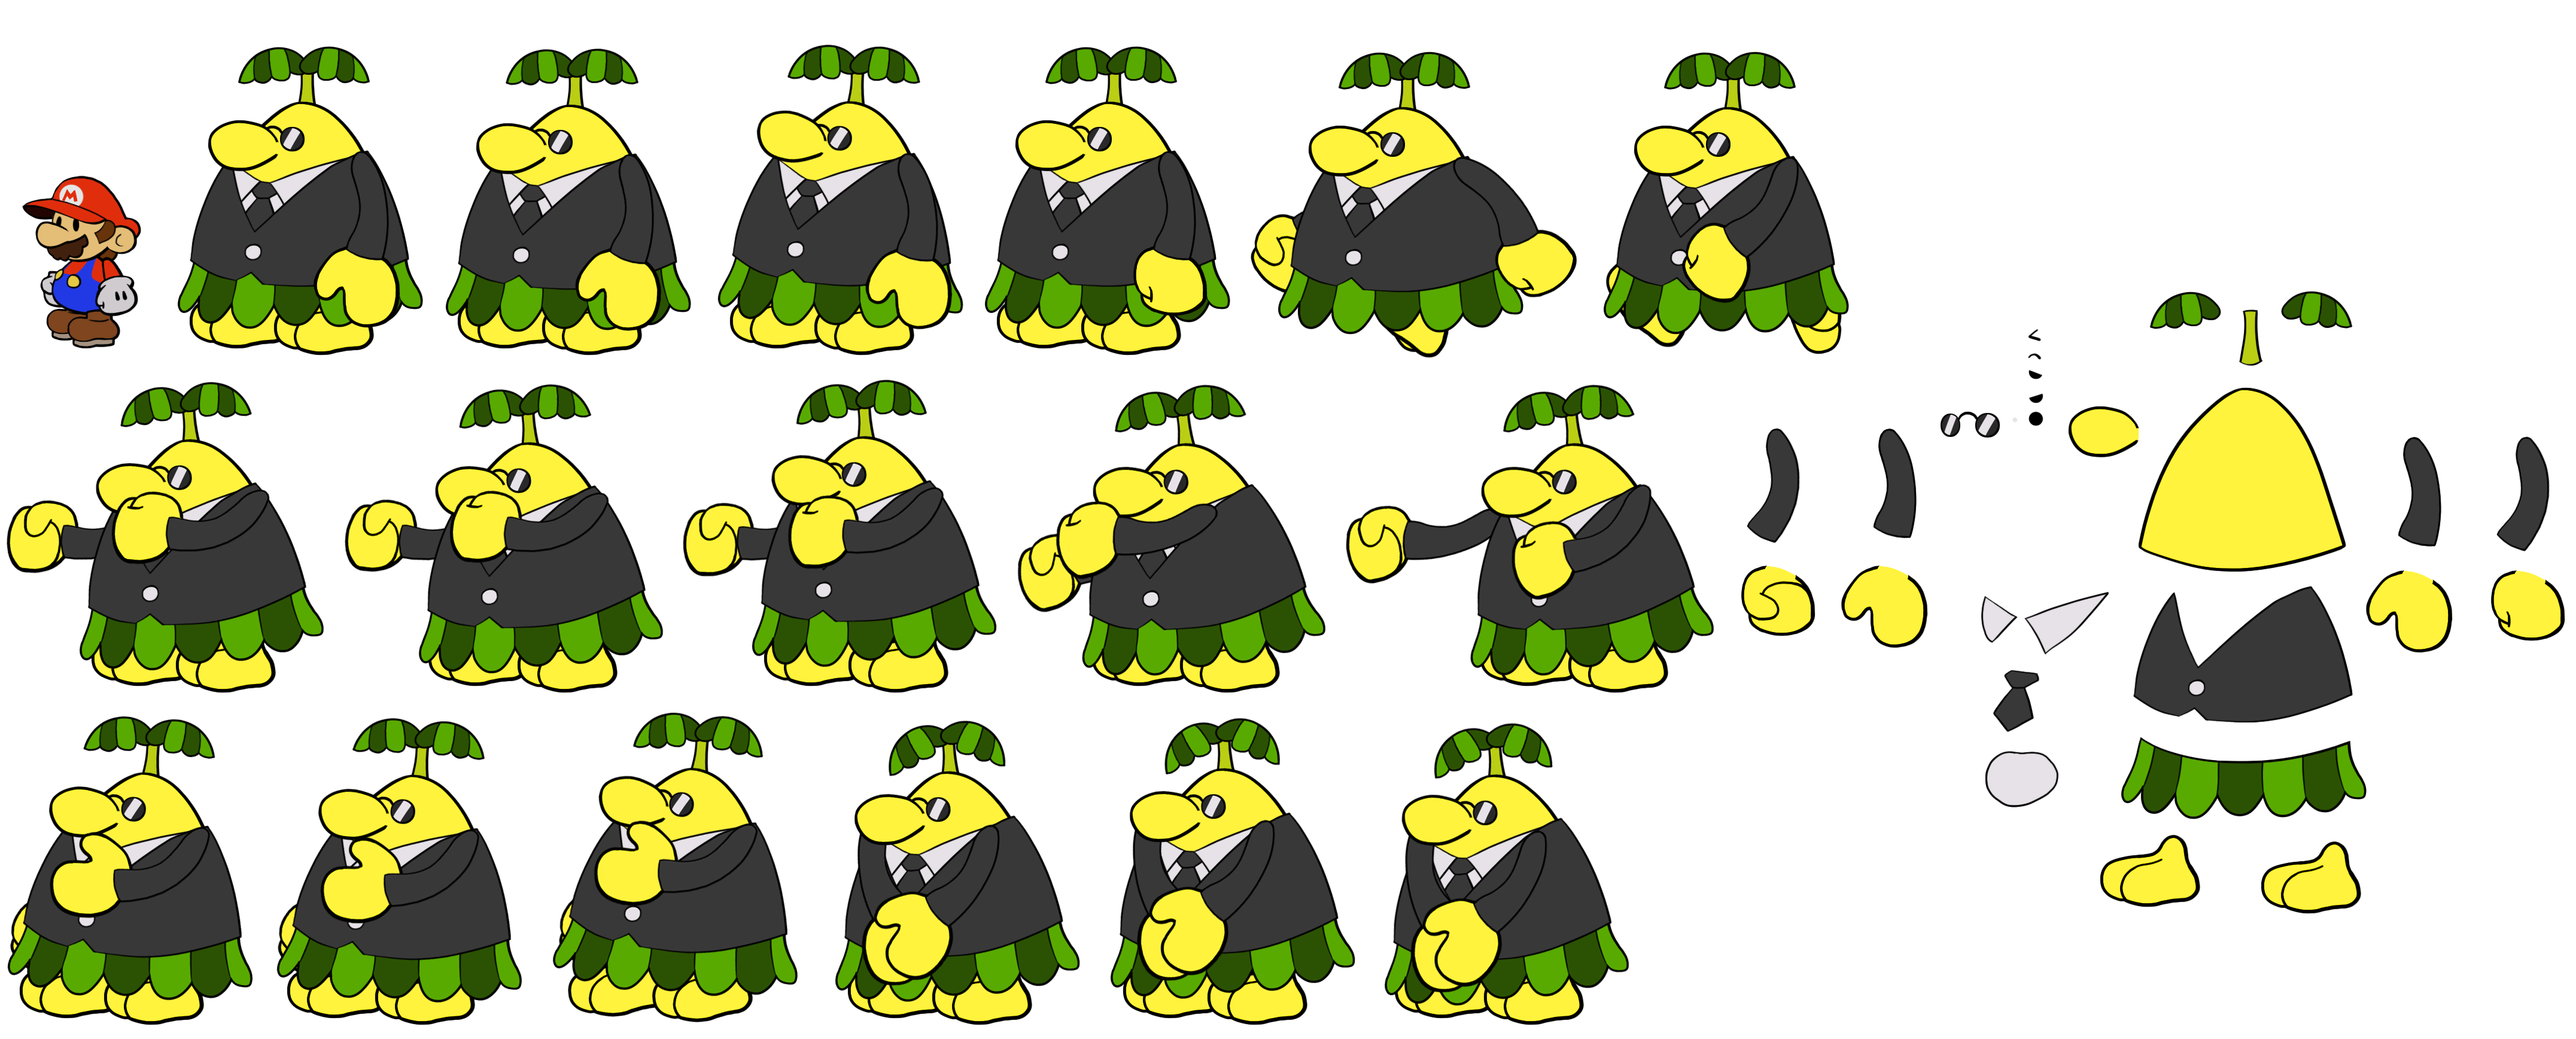 Don Pianta's Guards (Paper Mario-Style)